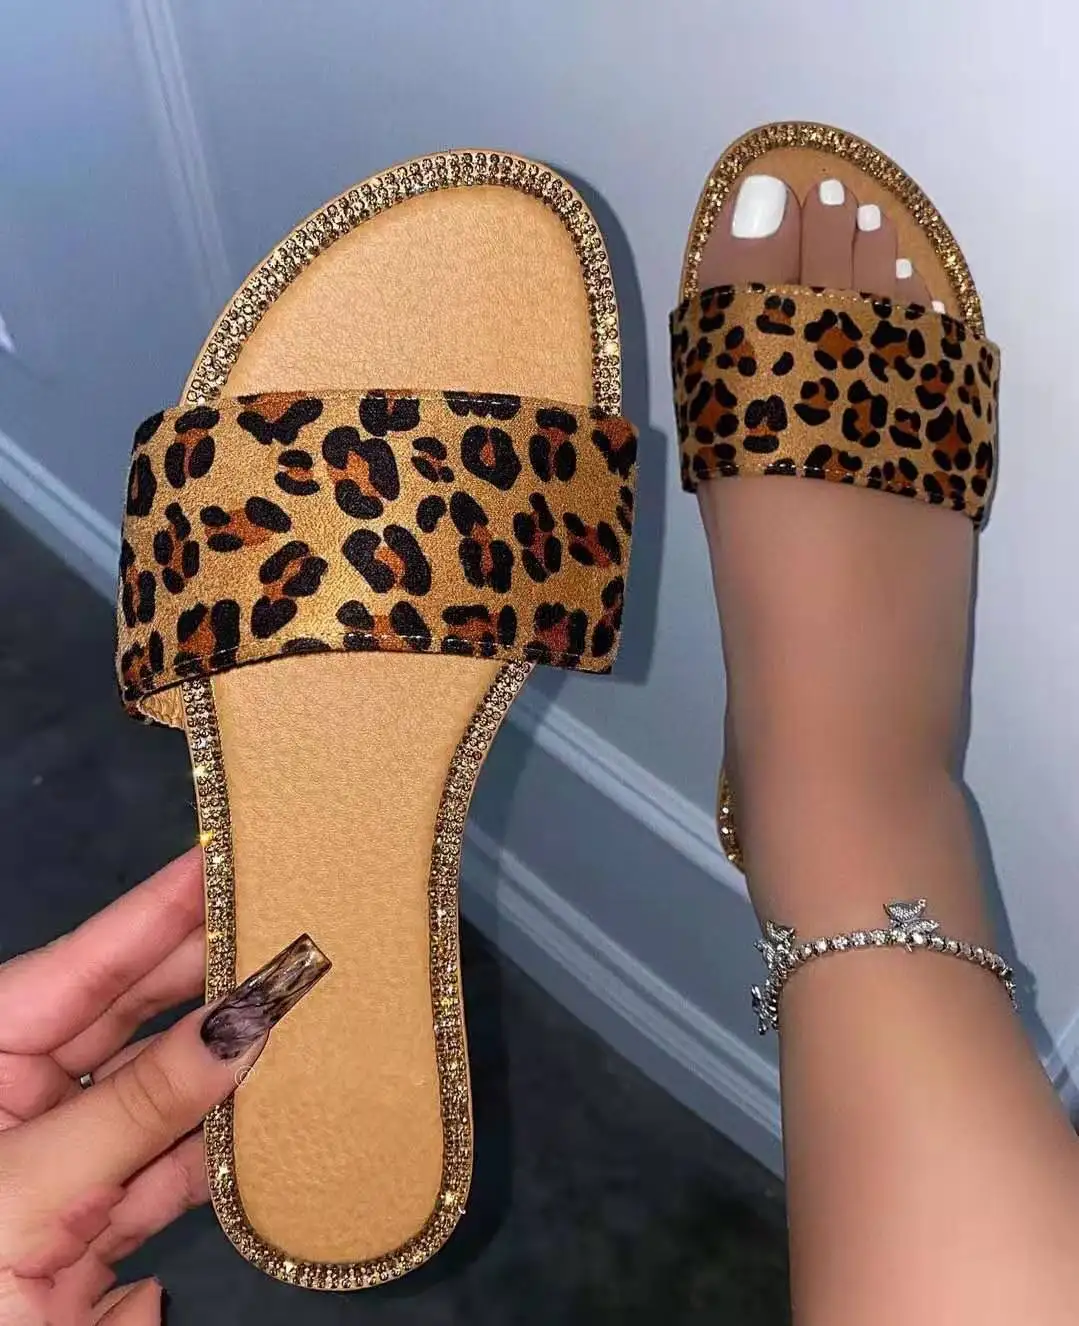 

LX-095 Cheap bulk wholesale instock flat sequined sandals slipper for women leopard print cross strap open toe beach sandals, Picture show